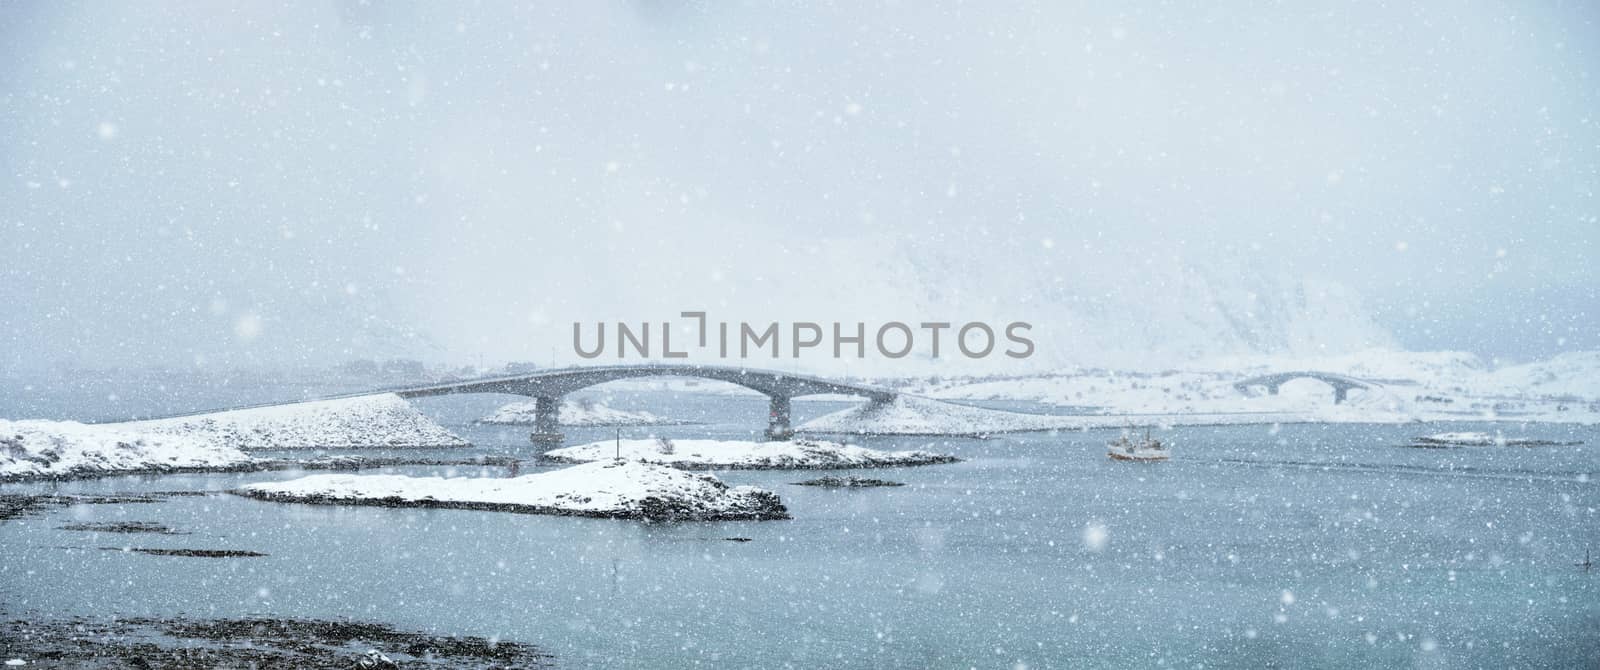 Snowfall on Lofoten islands, Norway by dimol